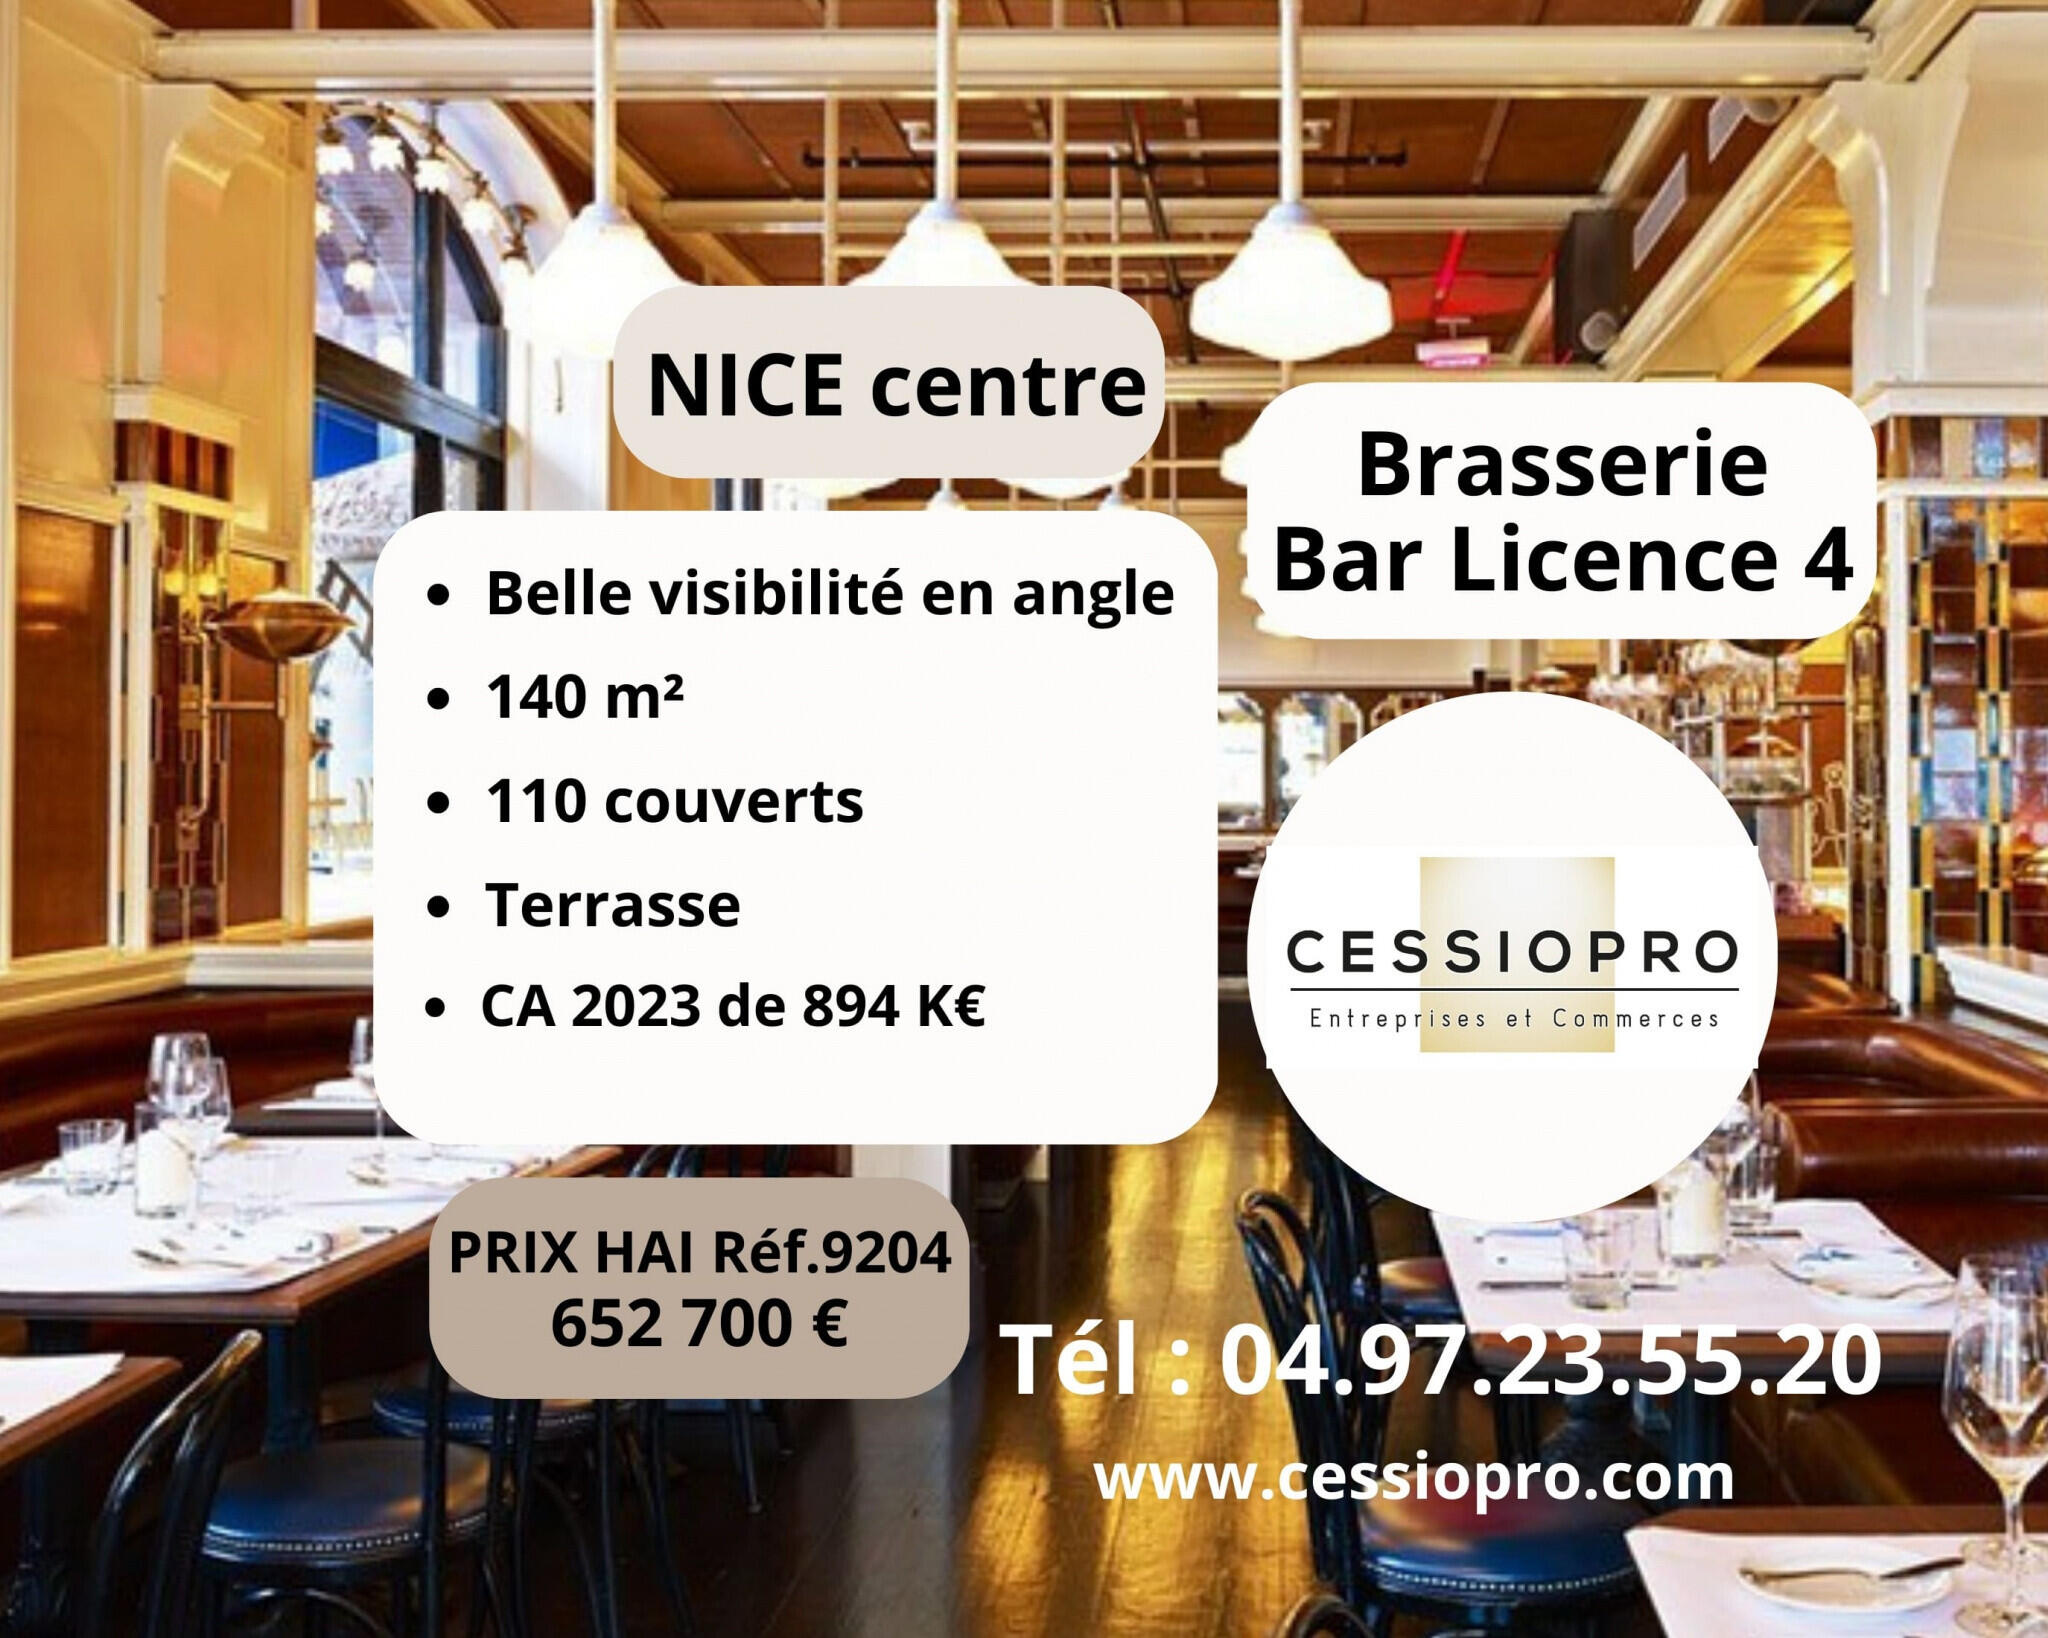 Brasserie bar licence 4 à vendre à Nice centre